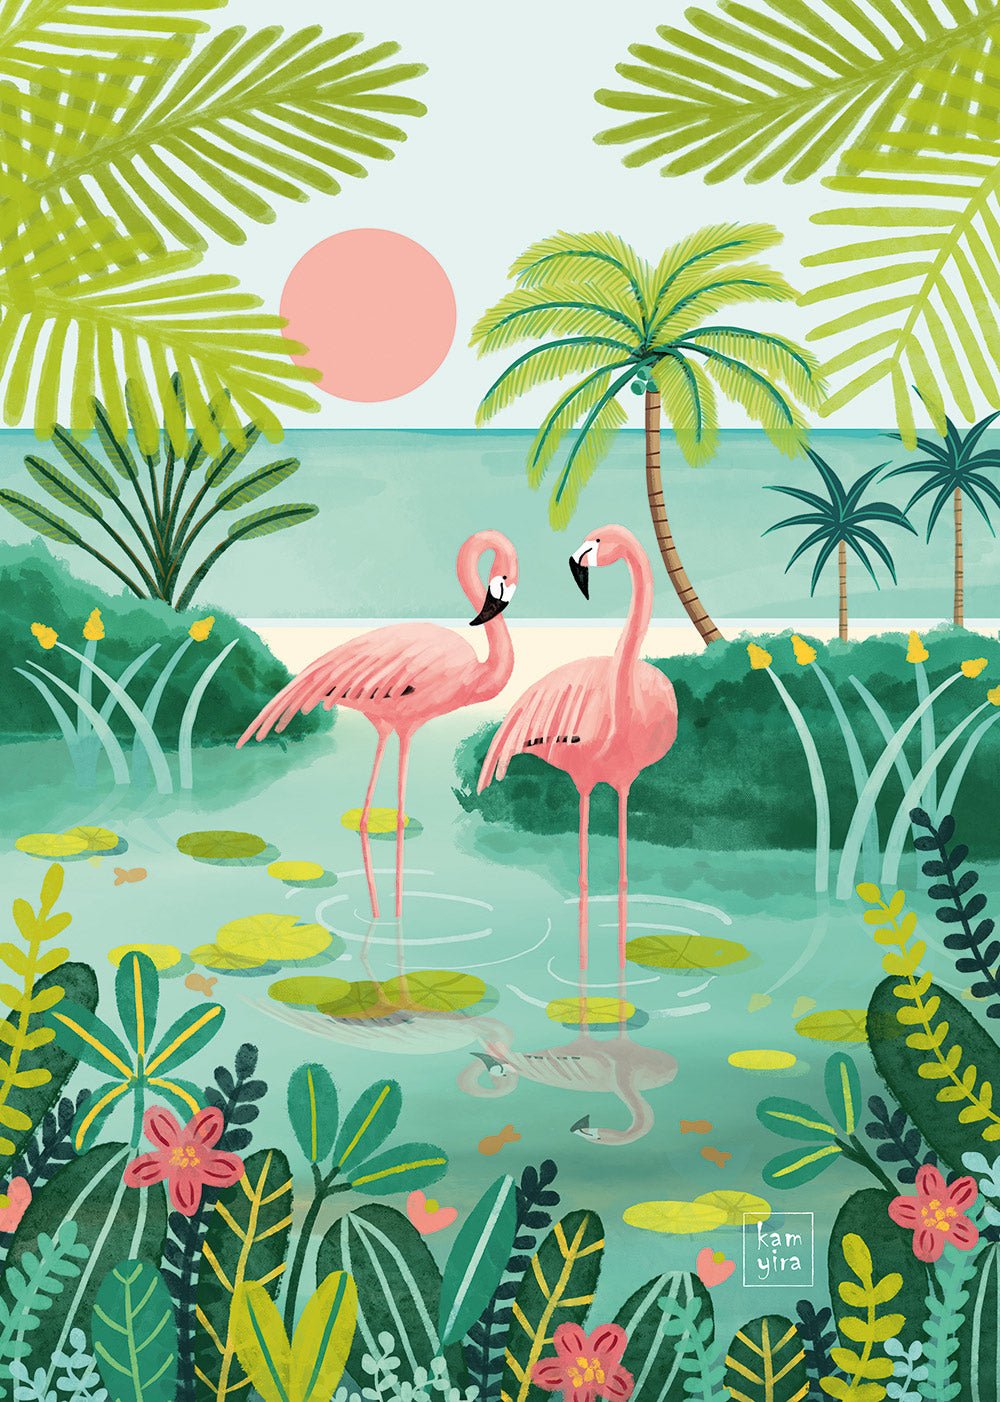 Flamingók Pieces & Peace 500 darabos kirakó puzzle (PP-0076 3770001400761) - puzzlegarden